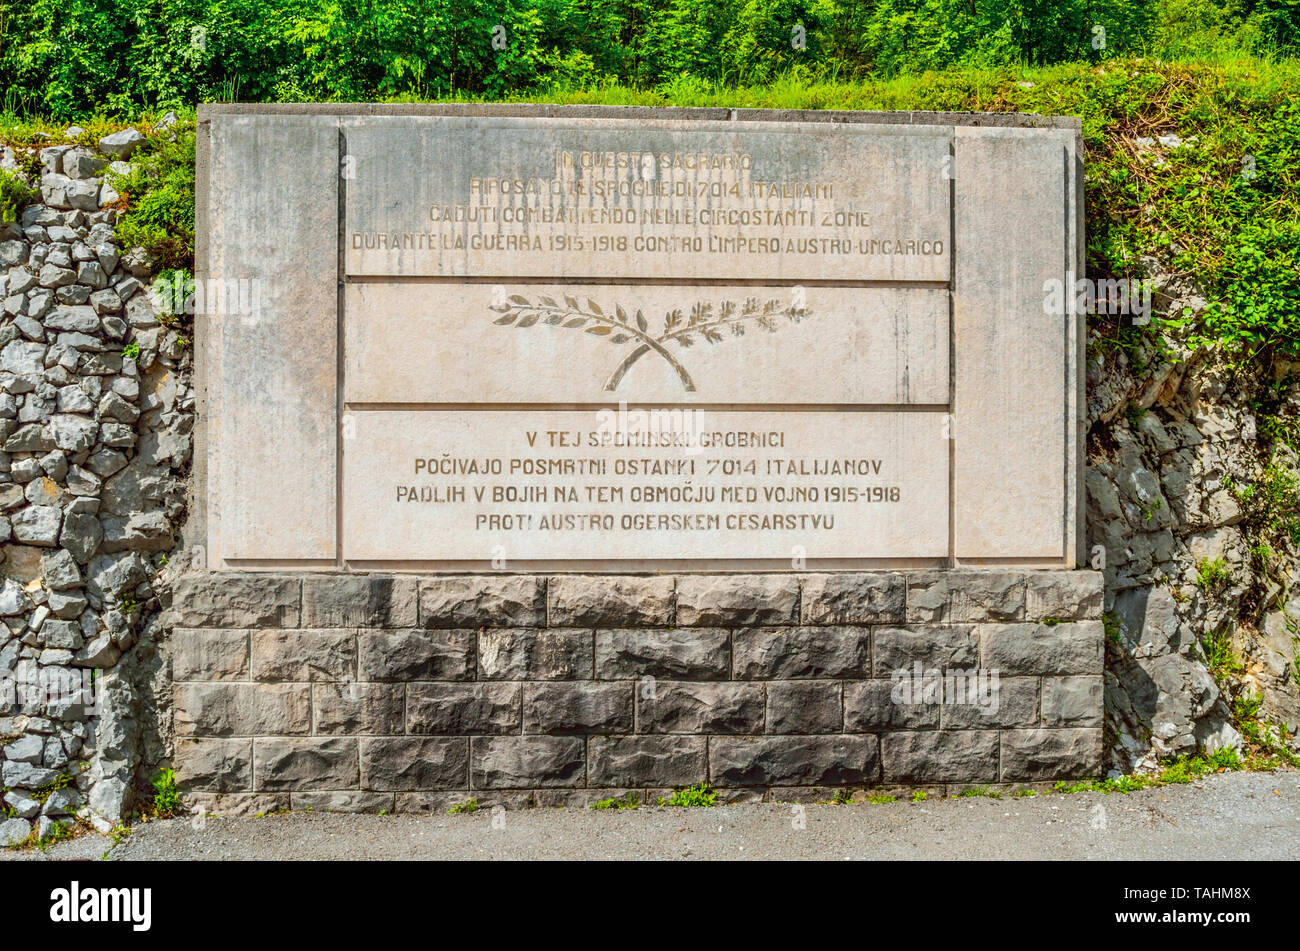 Kobarid Slovenia italian military memorial Caporetto World War I landmark Europe Stock Photo